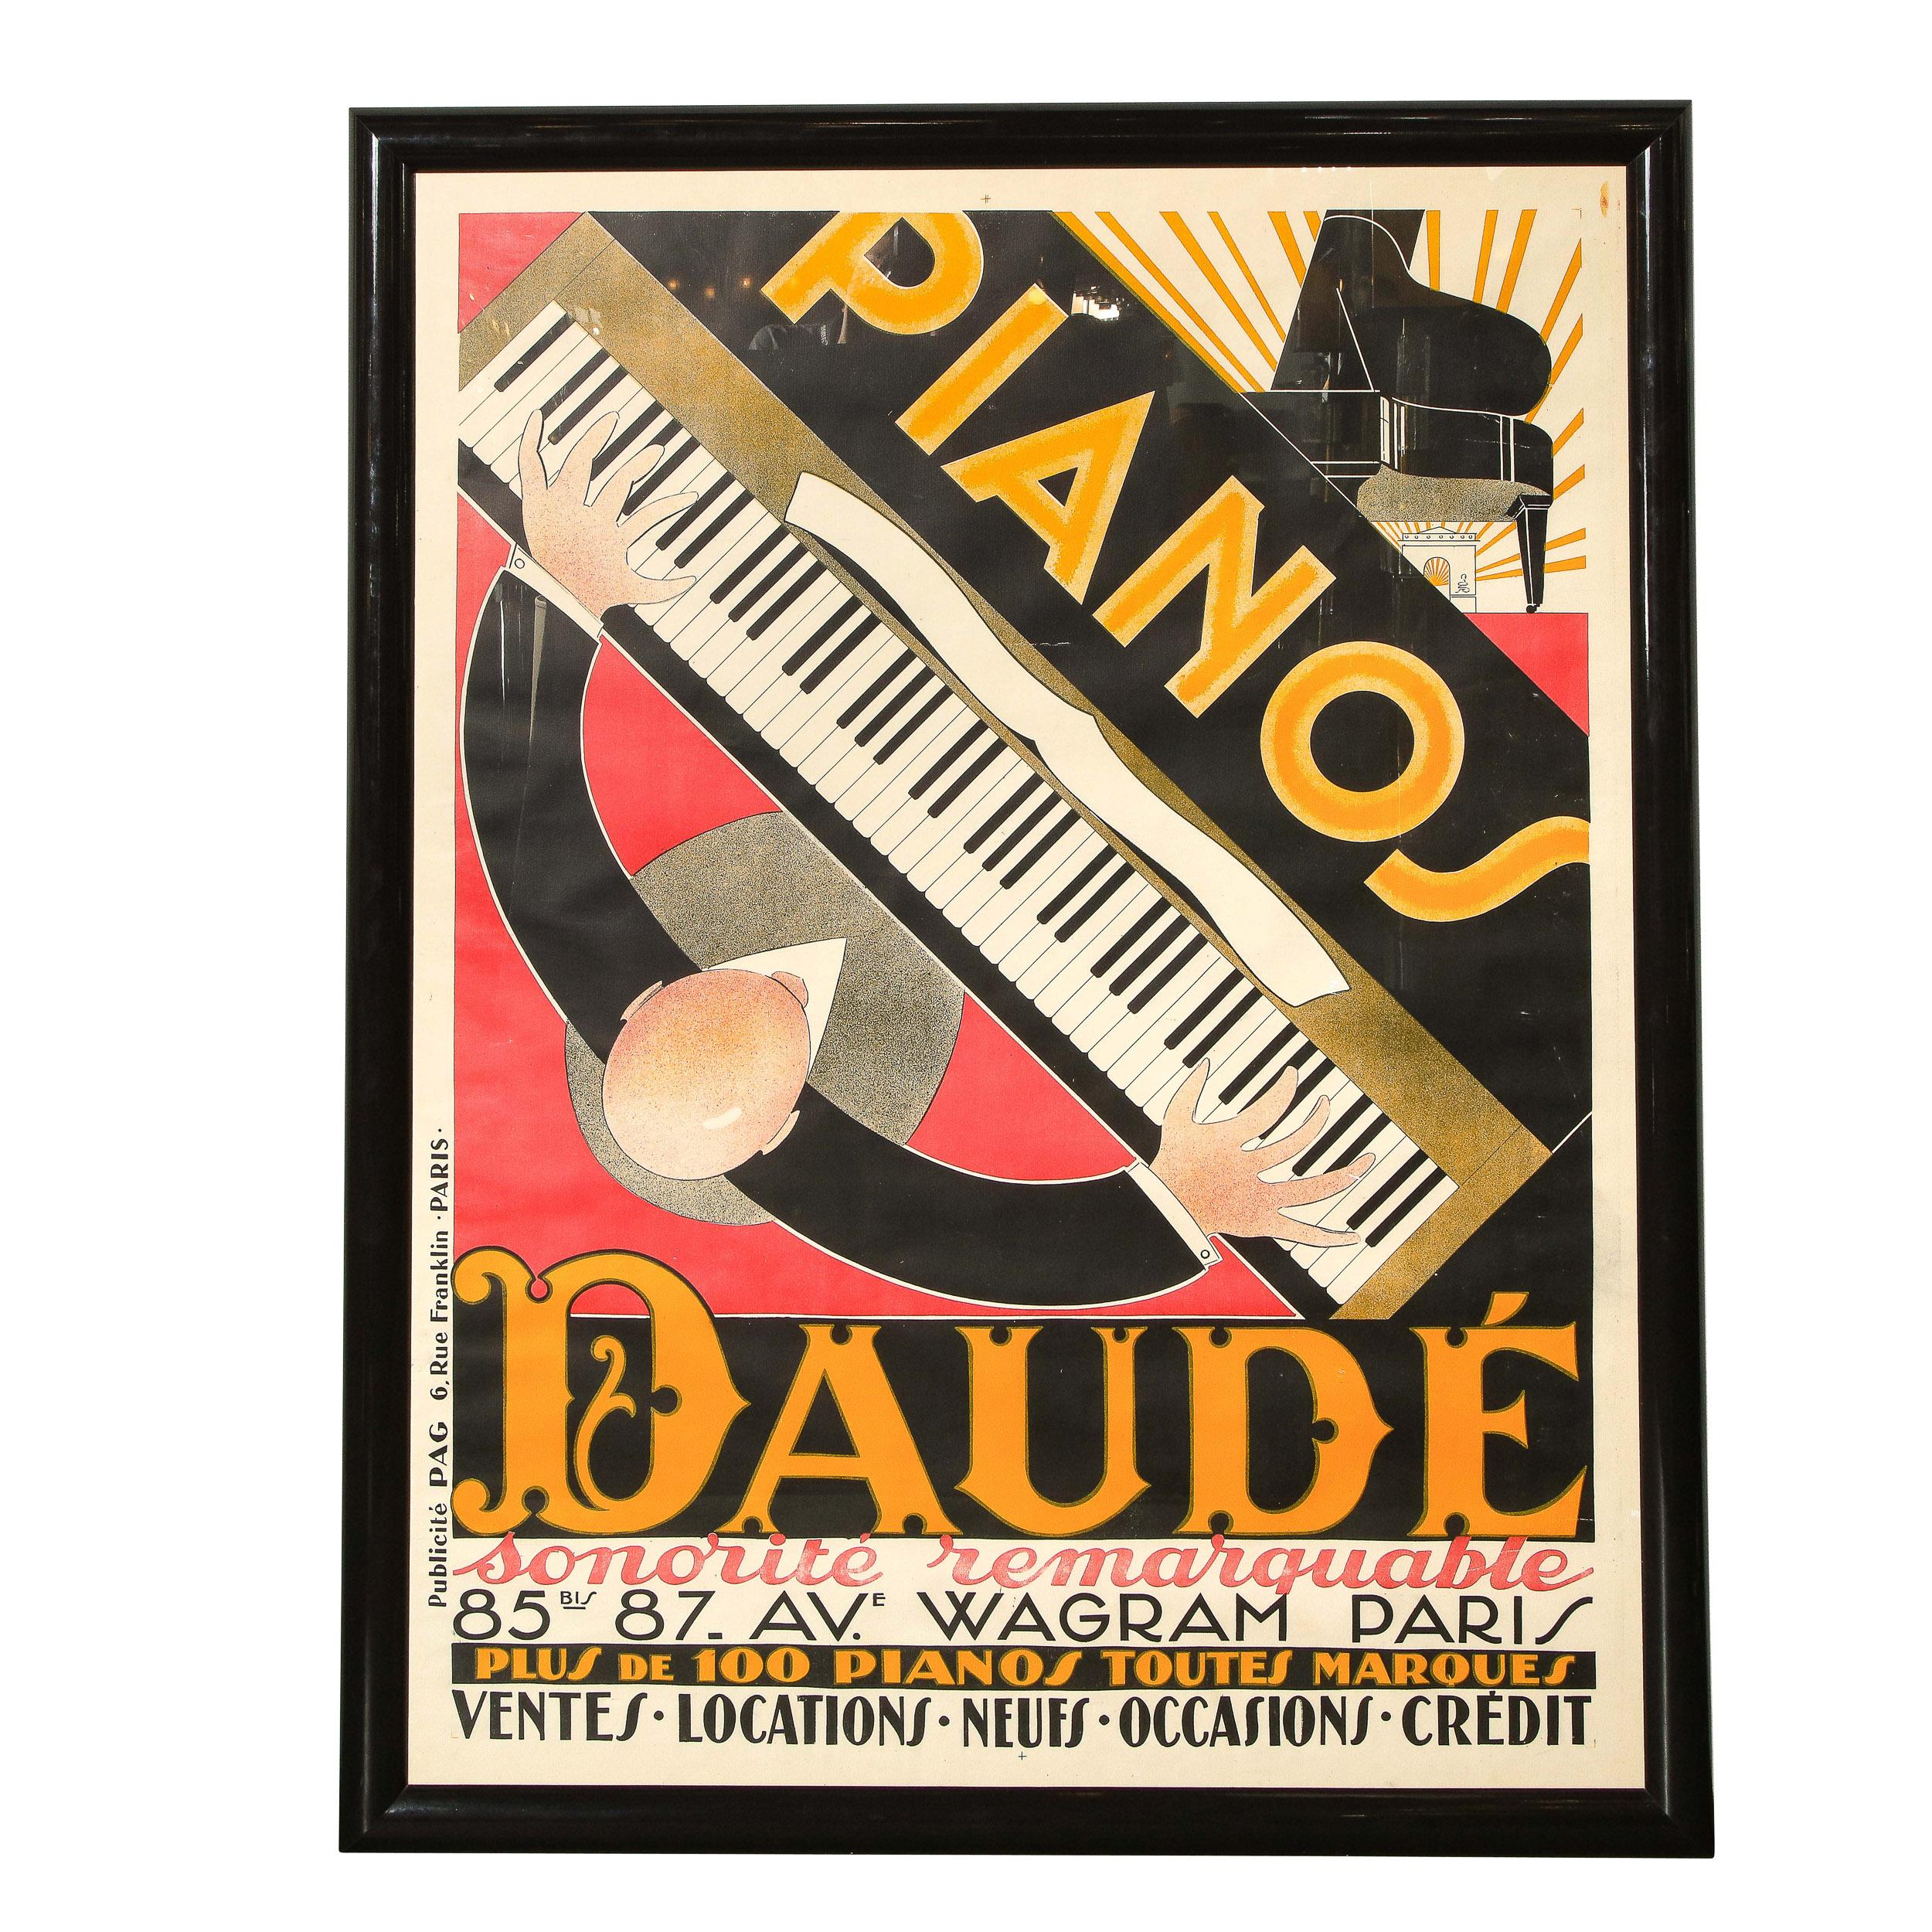 Piano's Daude